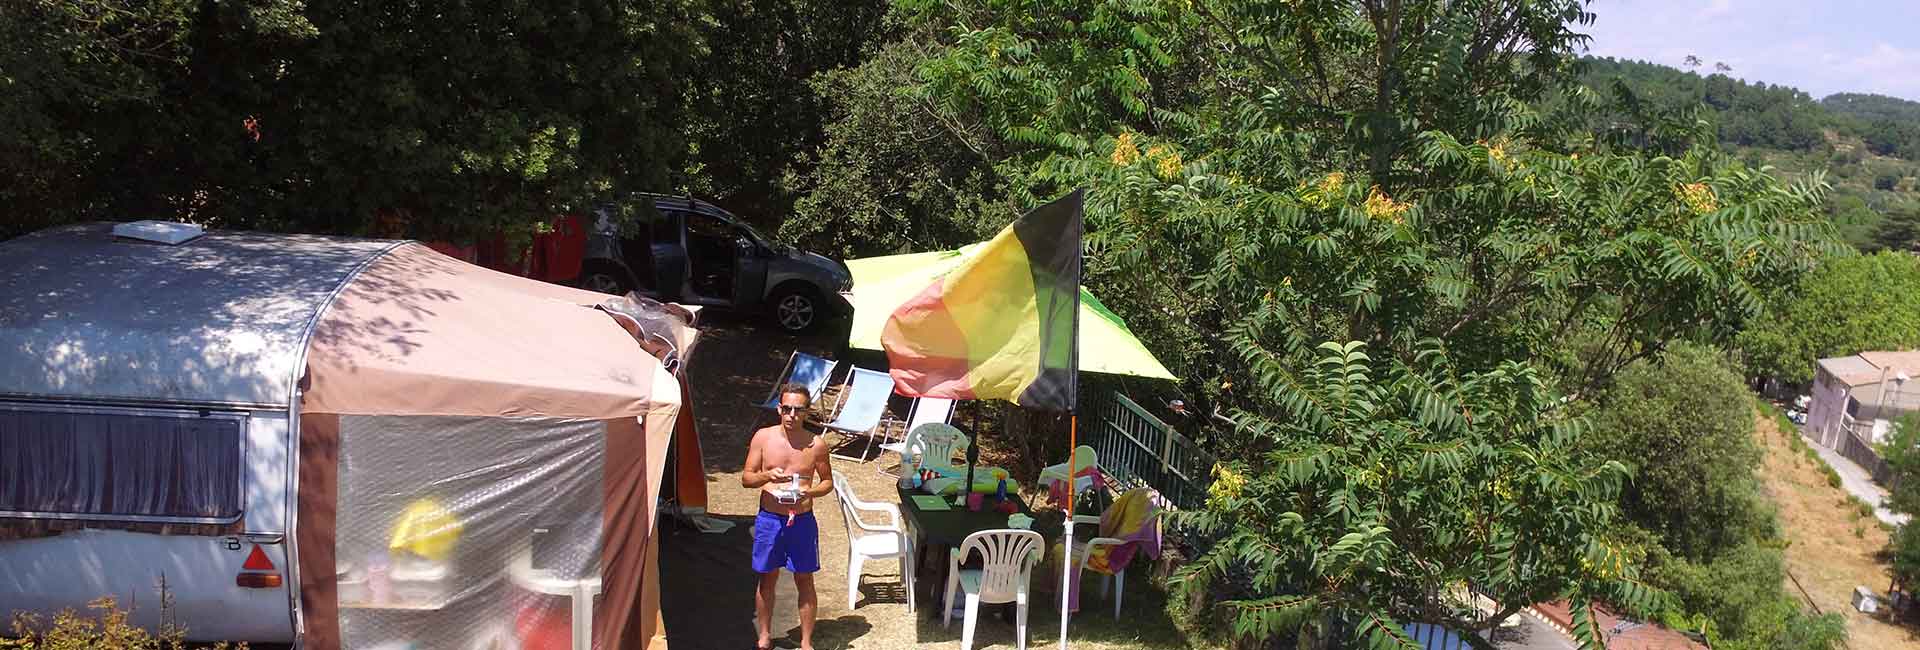 cheap pitches campsite barjac gard